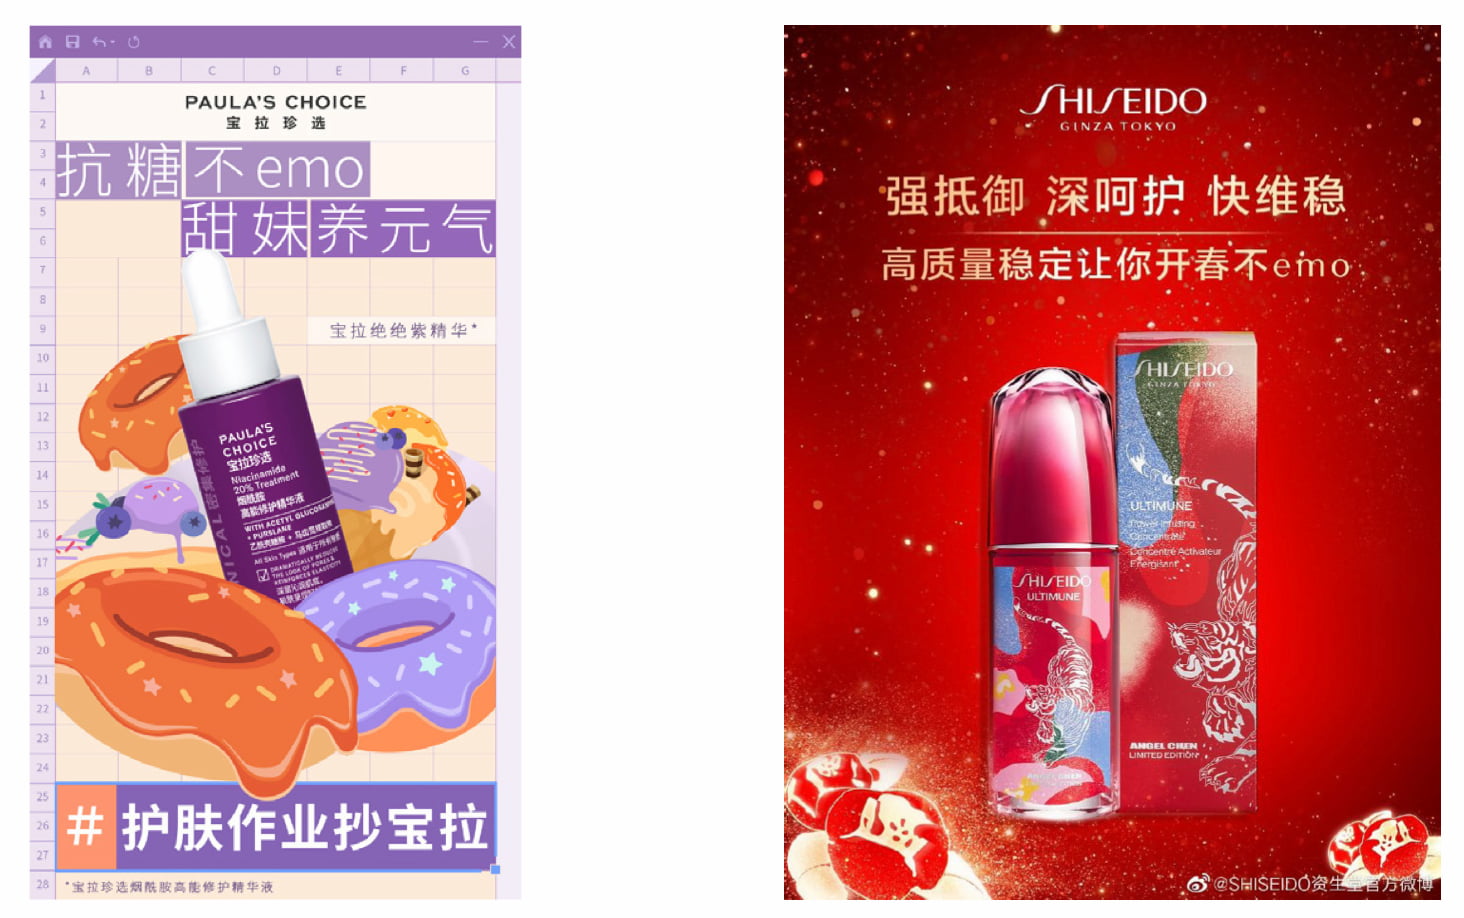 Paula’s choice and shiseido marketing campaigns